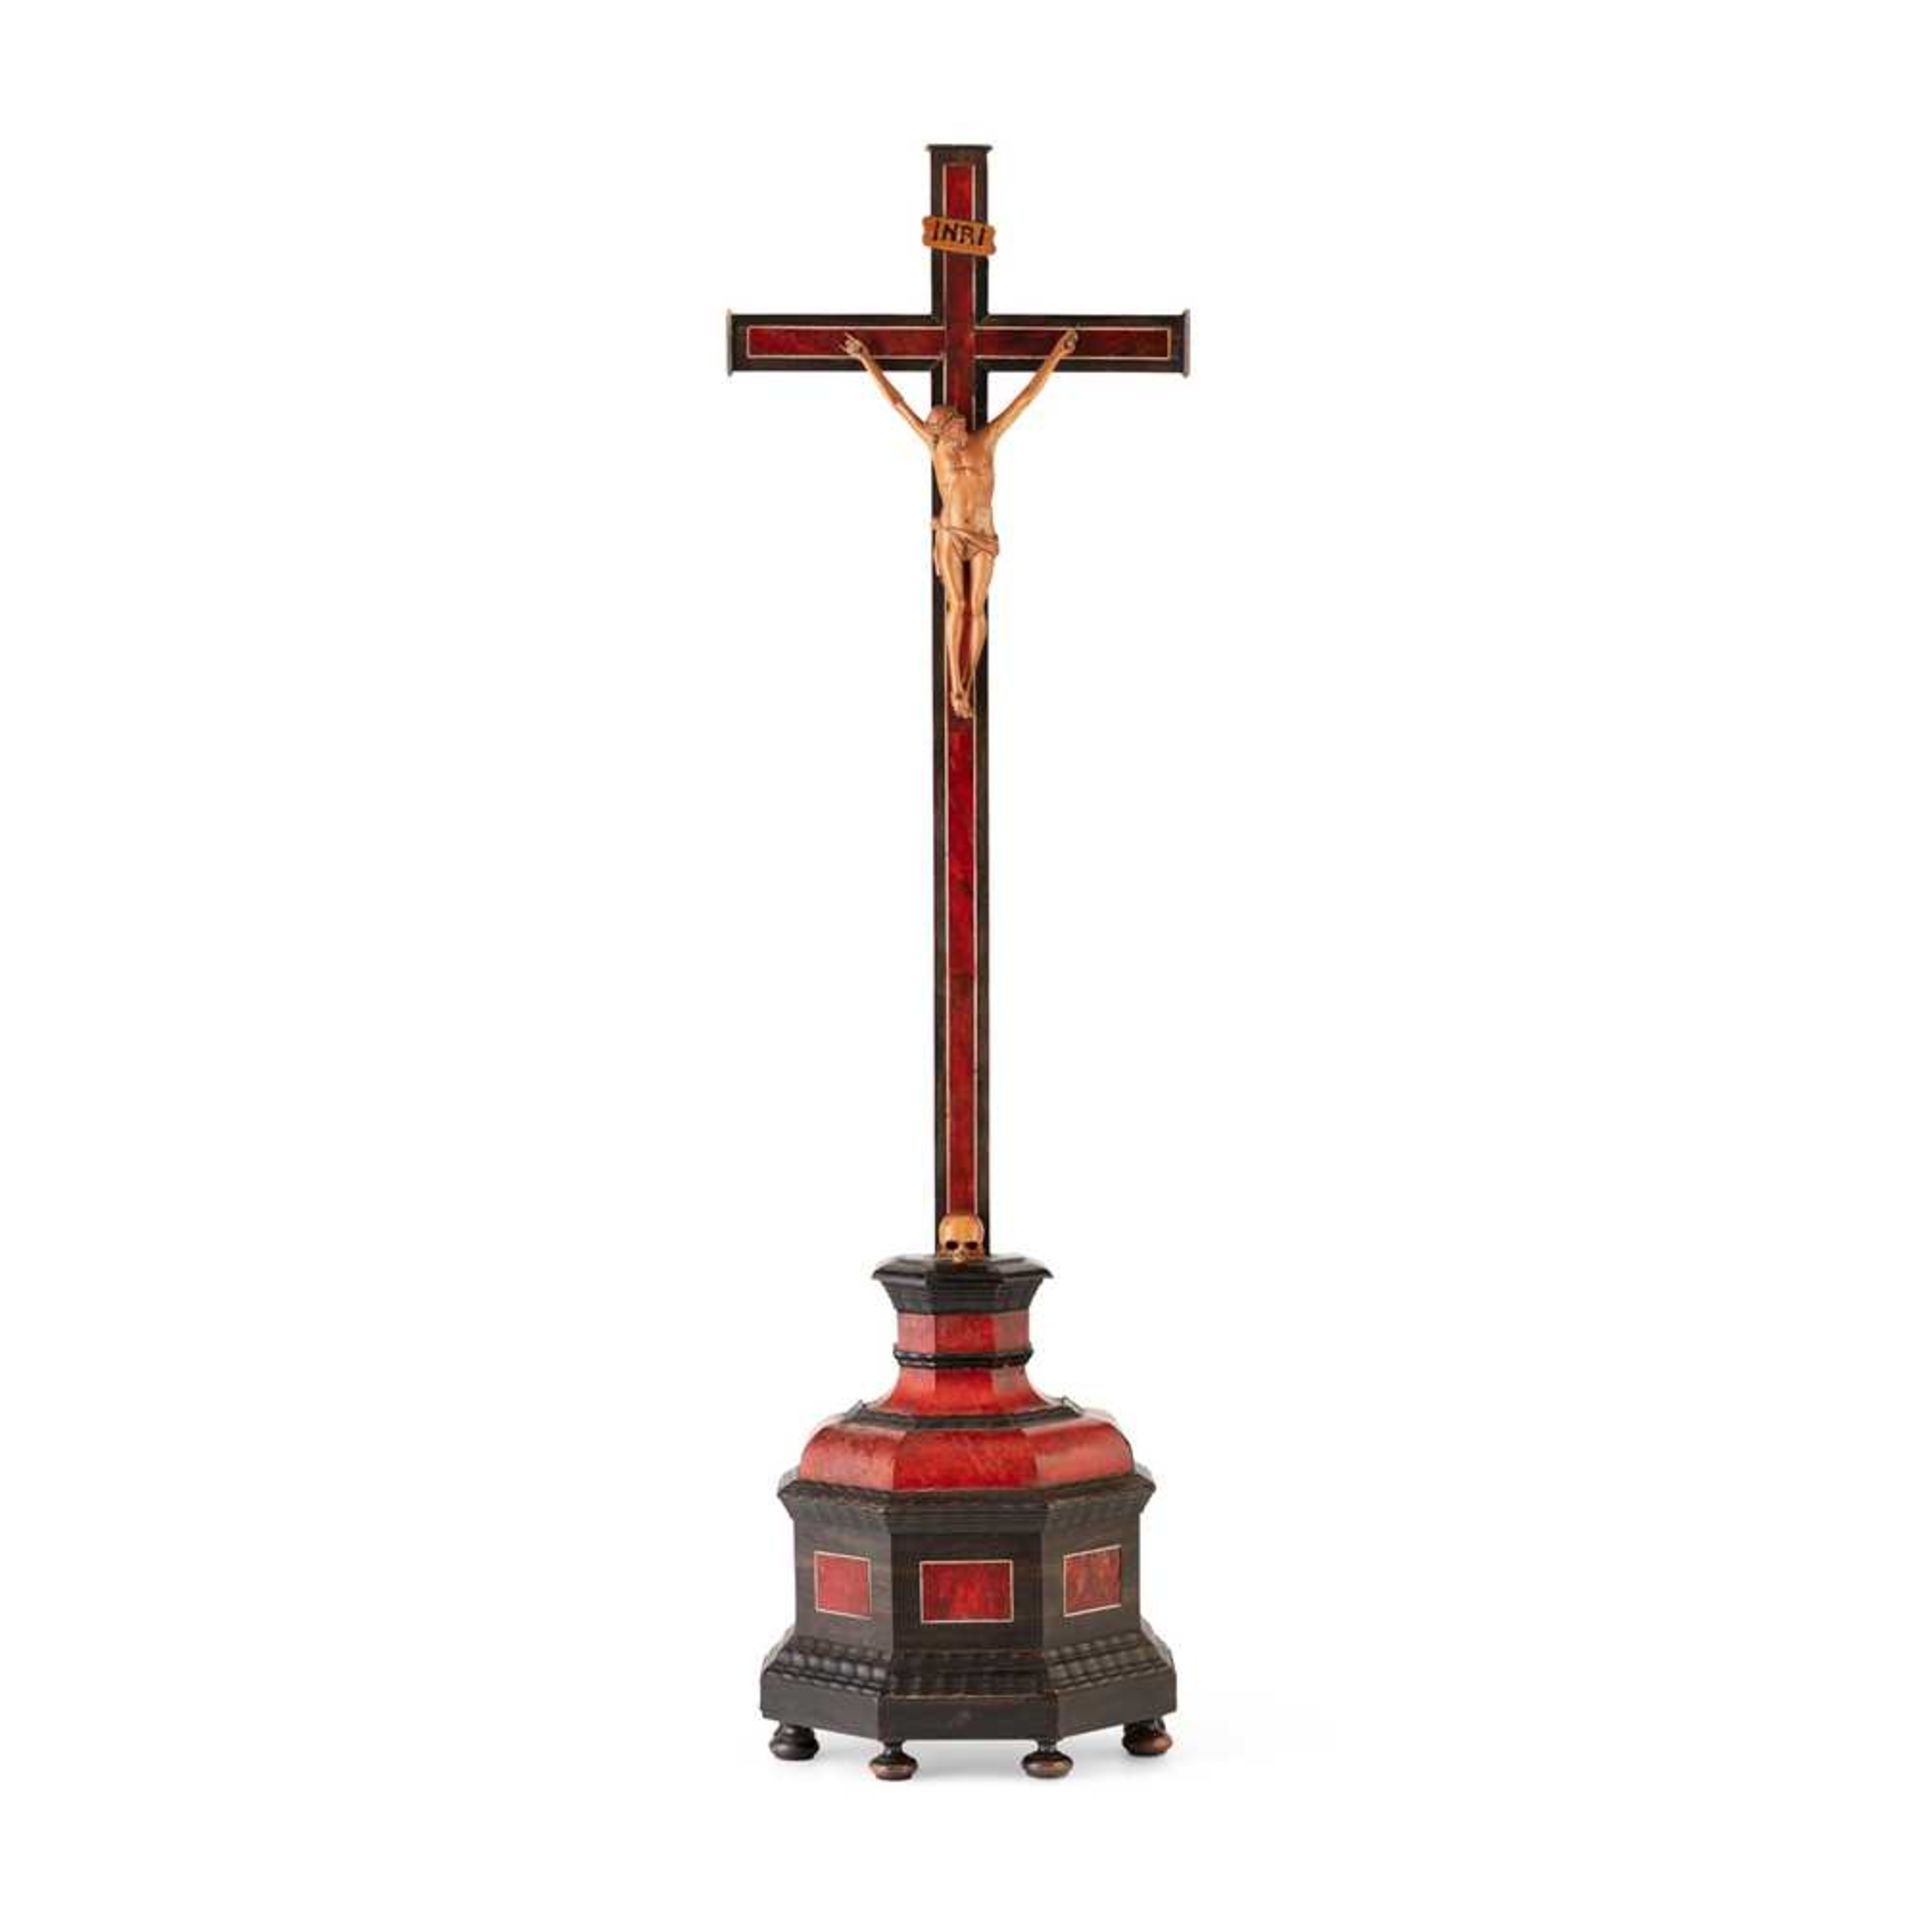 FLEMISH RED TORTOISESHELL AND CARVED FRUITWOOD CORPUS CHRISTI 18TH CENTURY